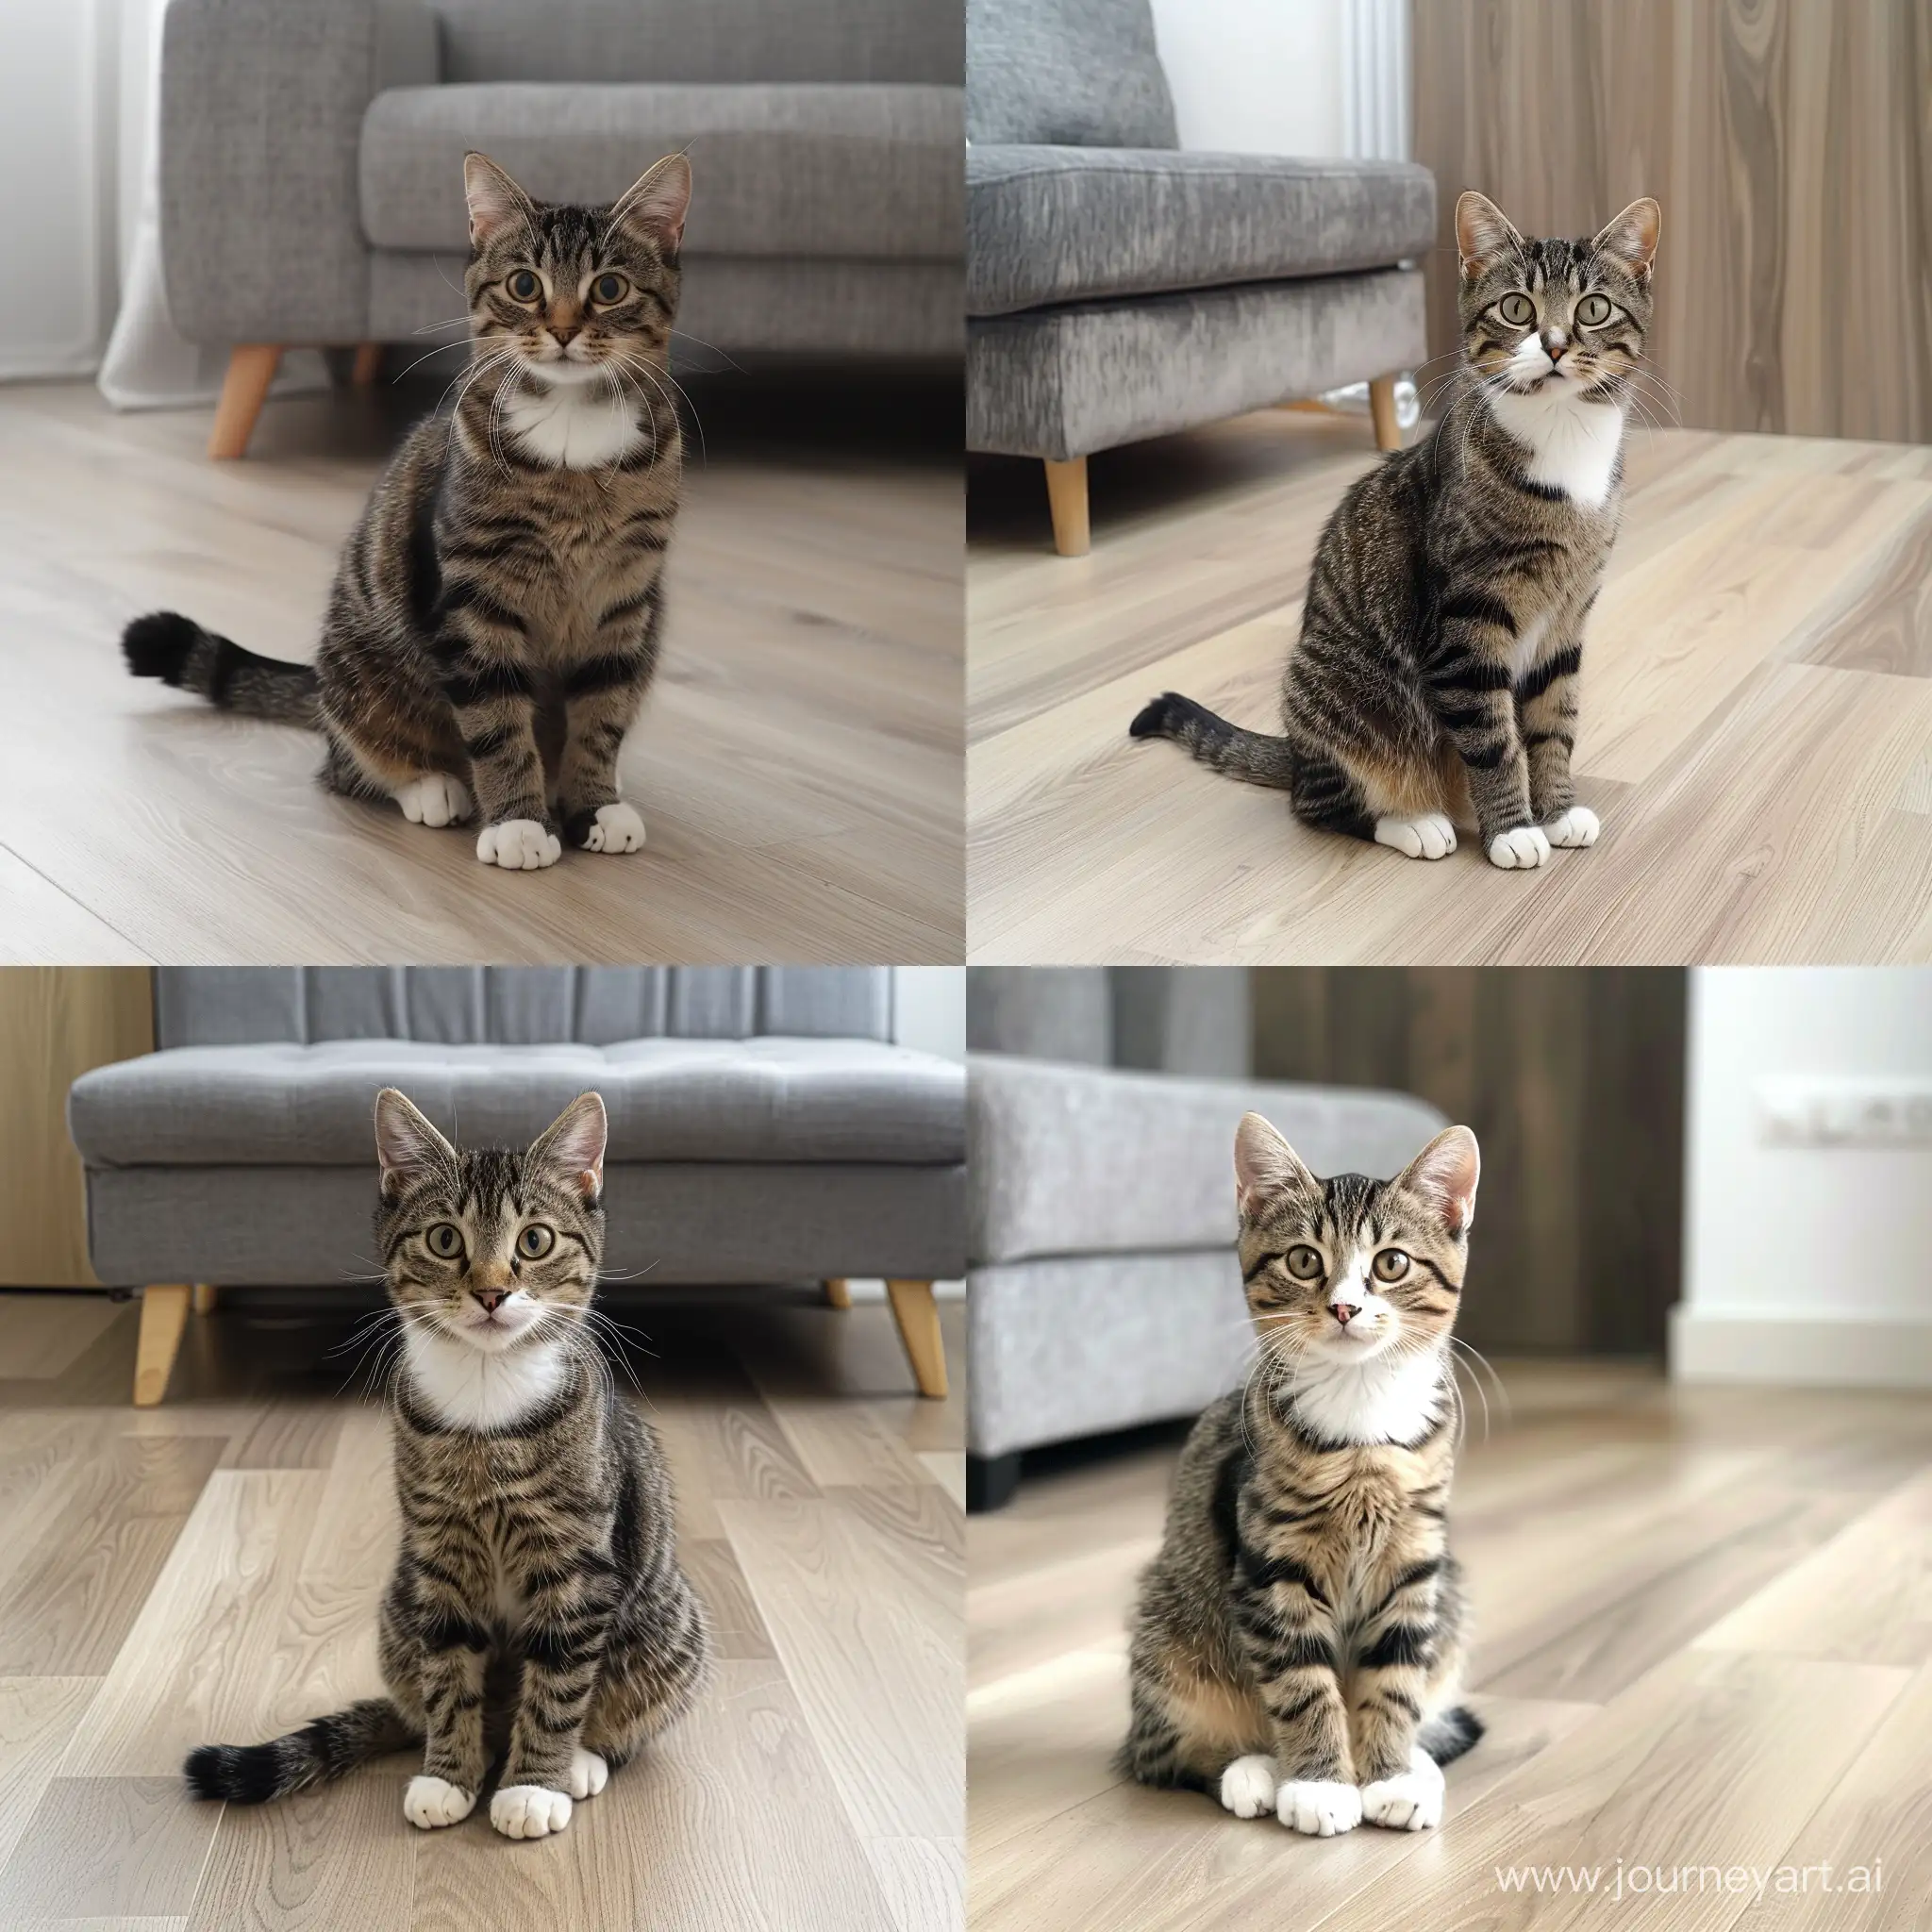 Adorable-EightMonthOld-Tabby-Cat-on-Light-Wooden-Floor